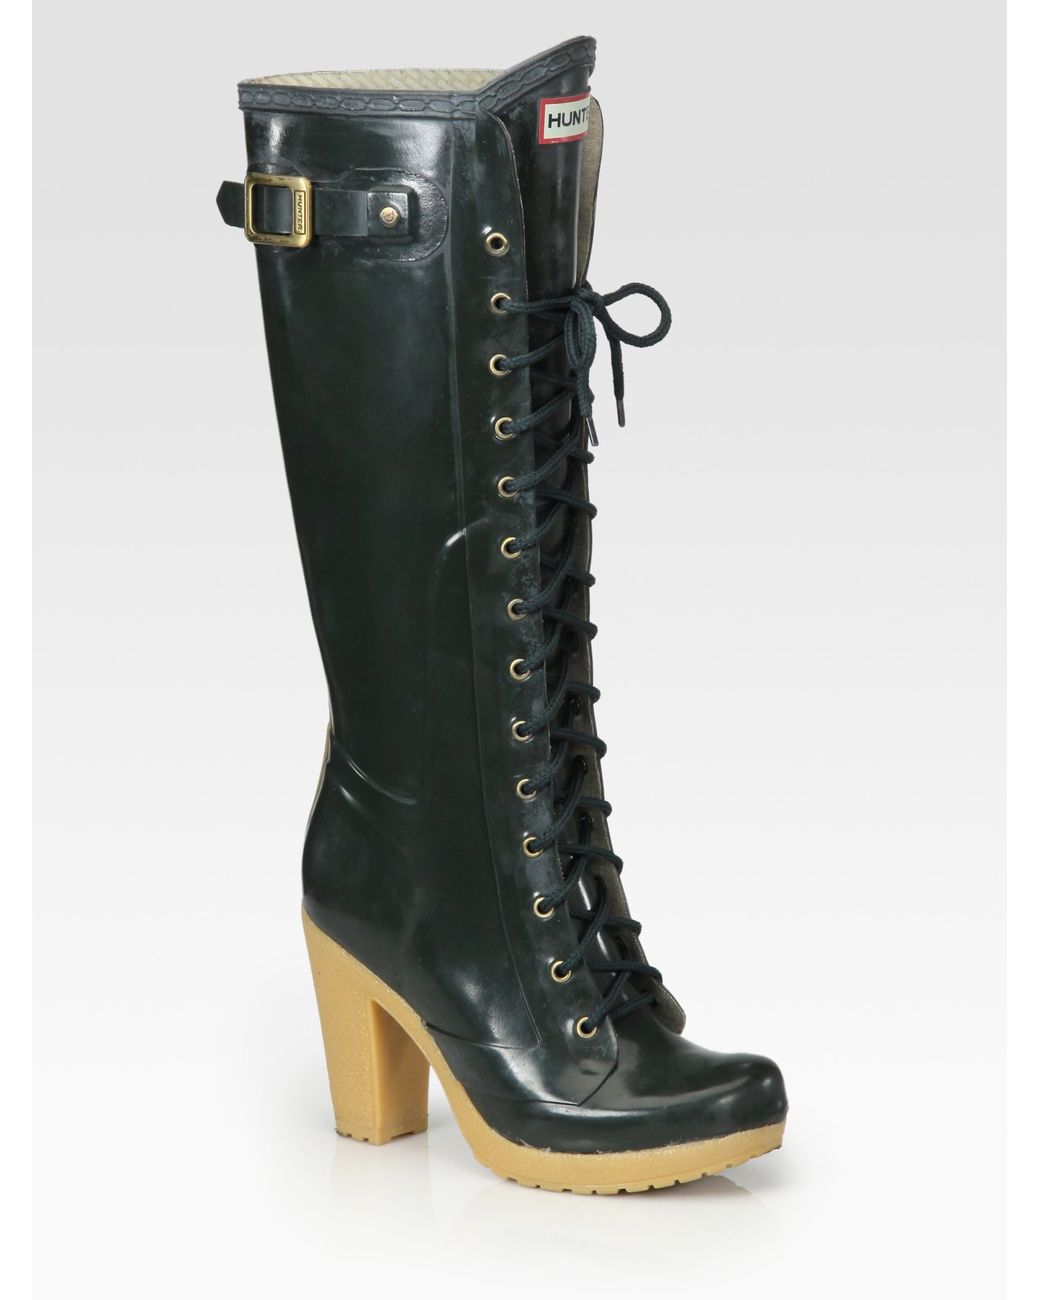 HUNTER Labins Lace-up High Heel Rain Boots in Black | Lyst